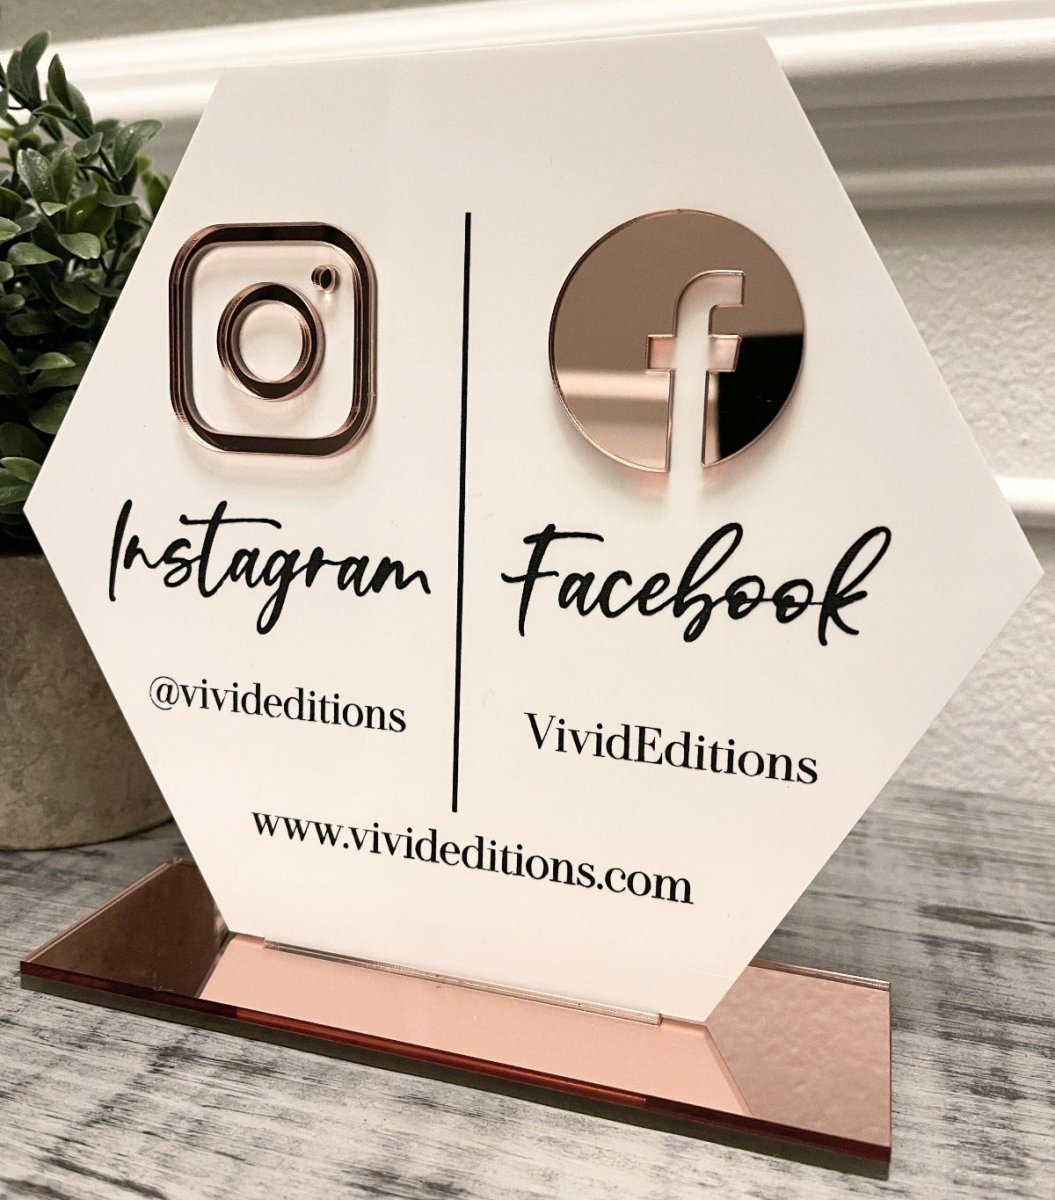 Social Media Business Sign - Double Icon Social Media Sign - VividEditions